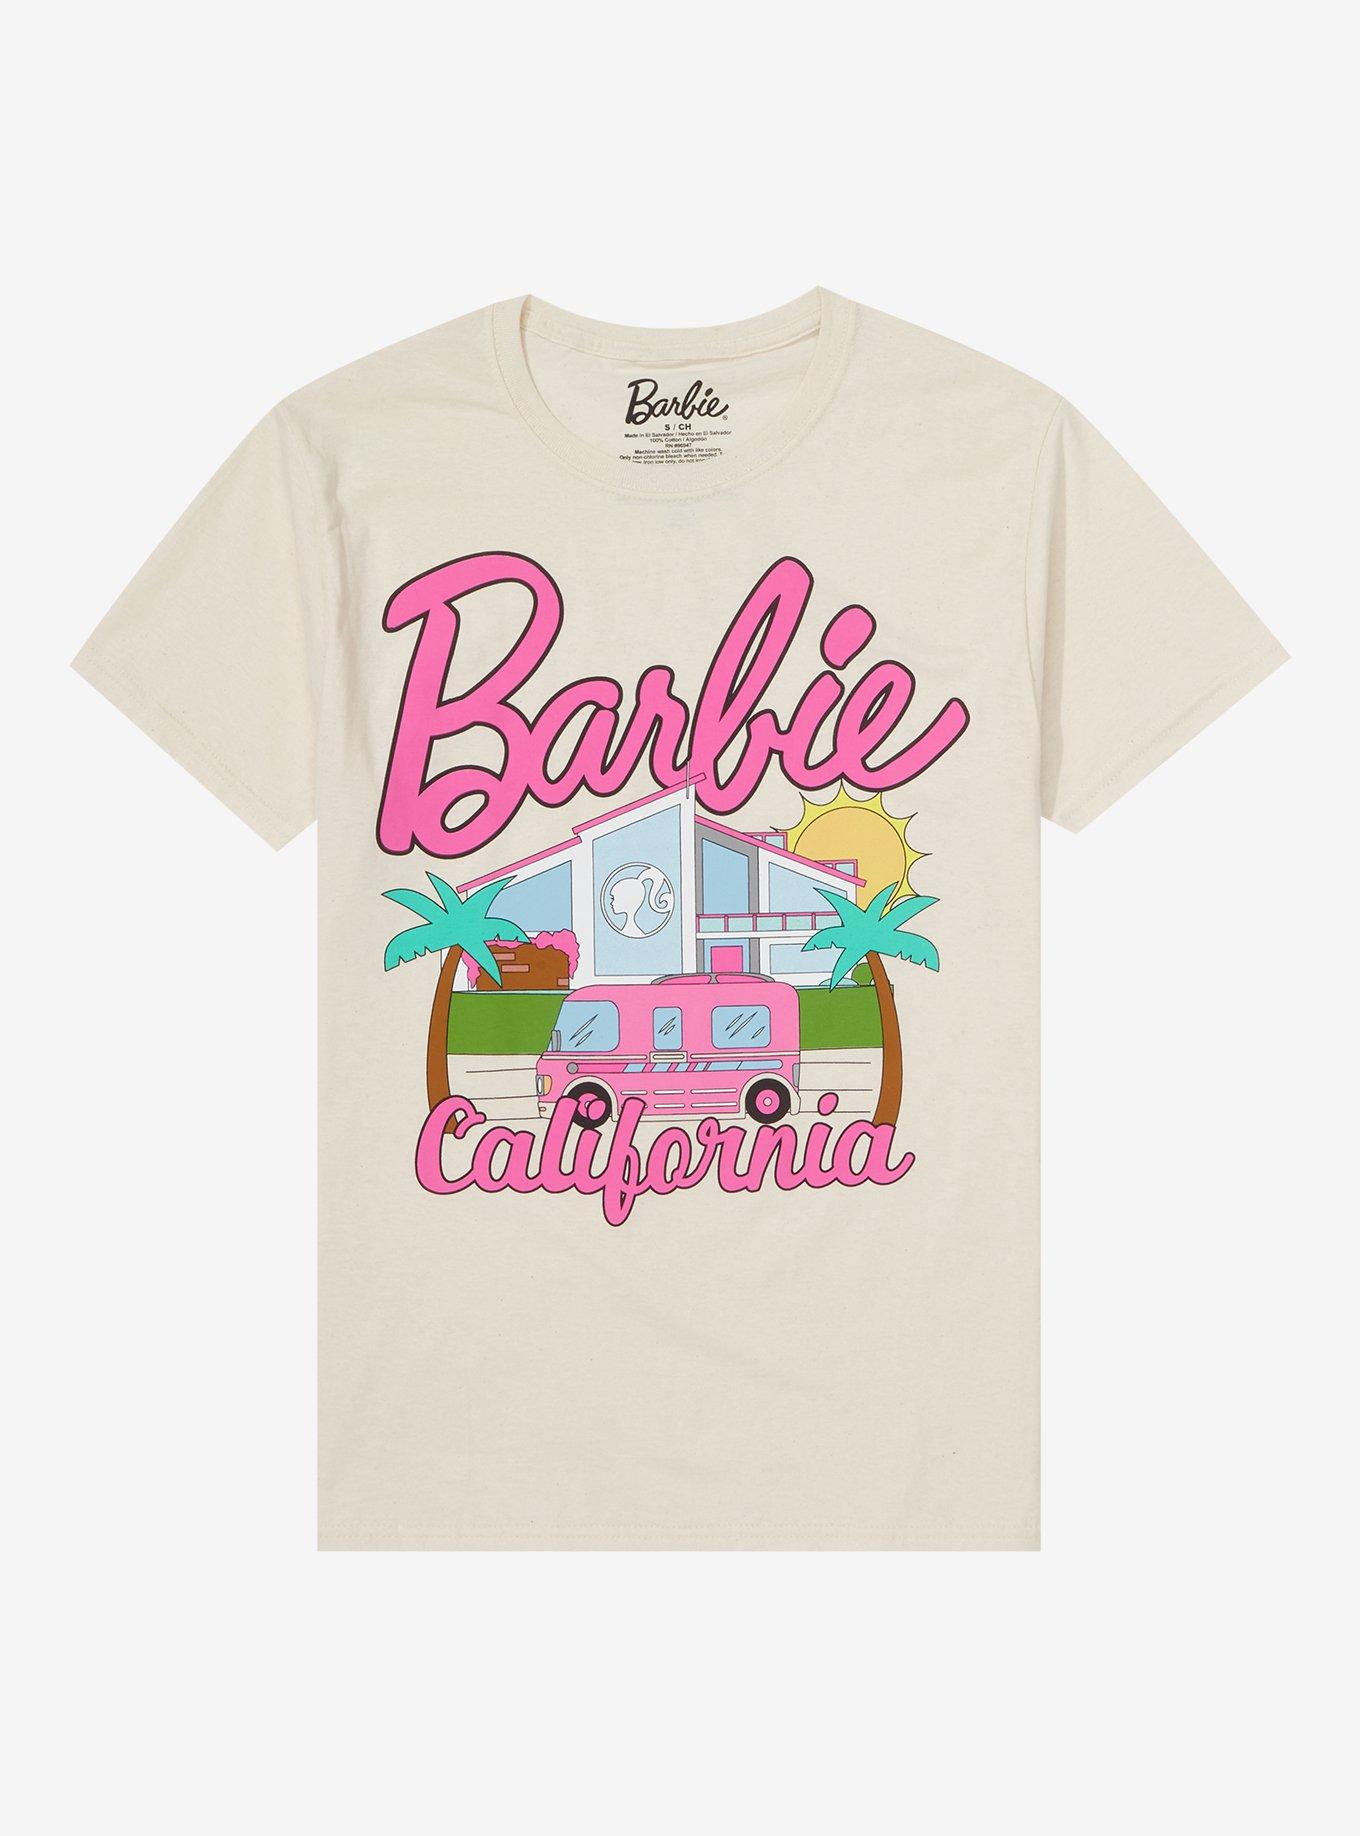 Barbie Dreamhouse Boyfriend Fit Girls T-Shirt